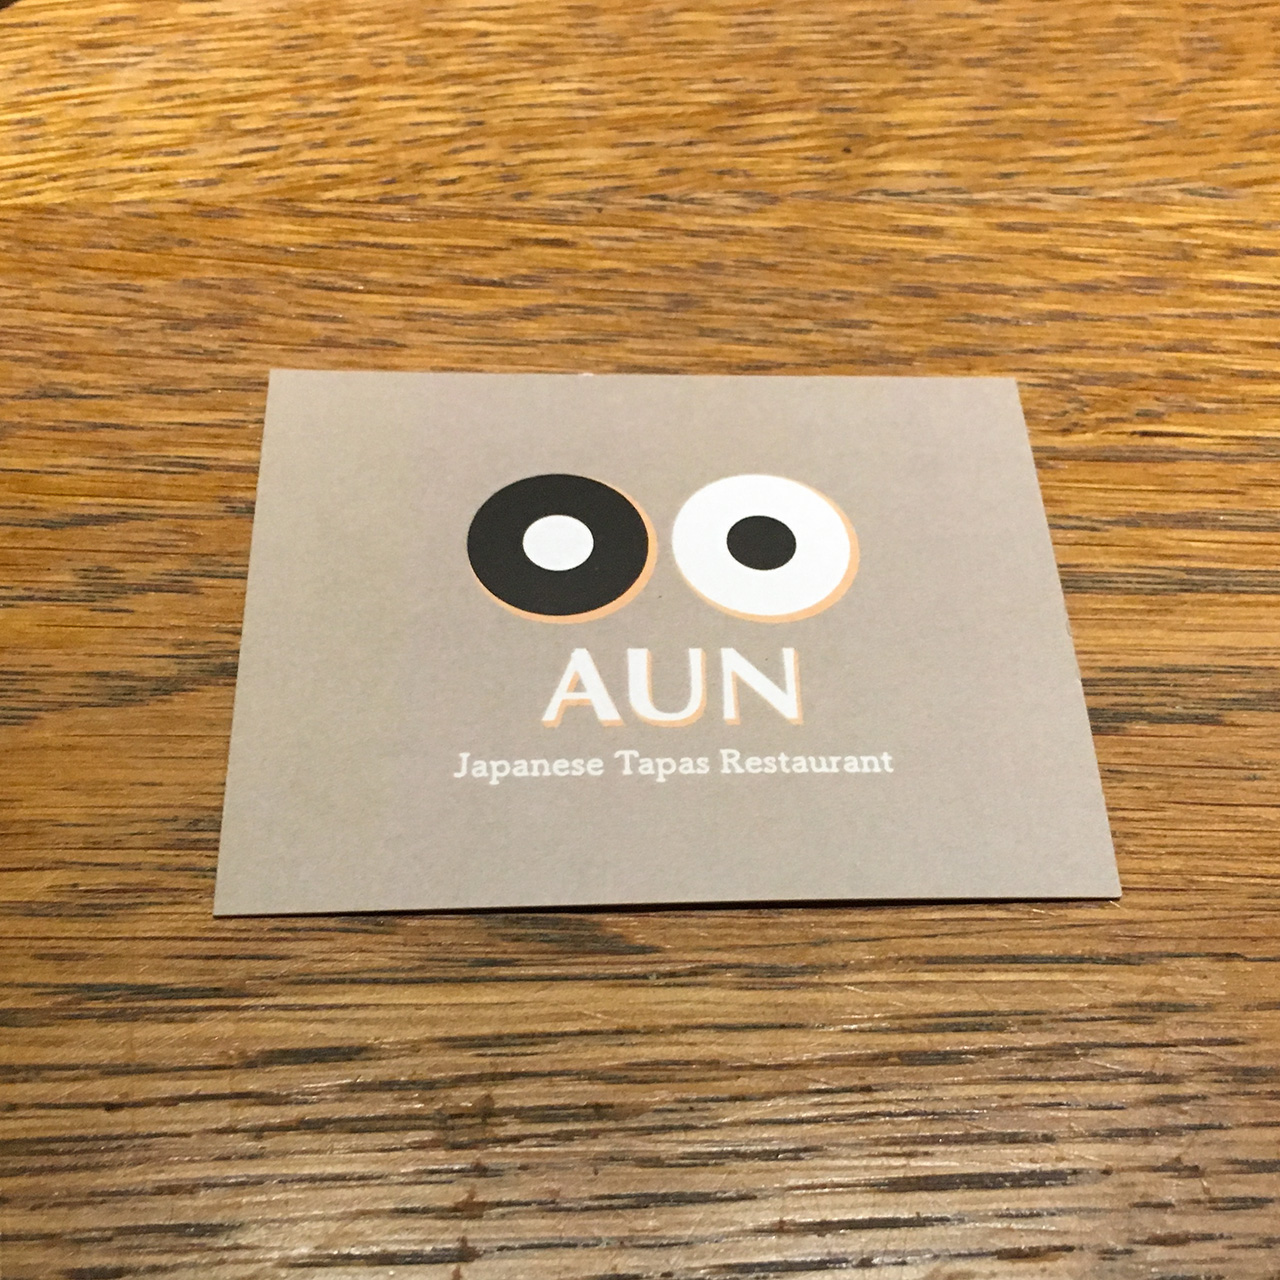 20171114_aun_logo